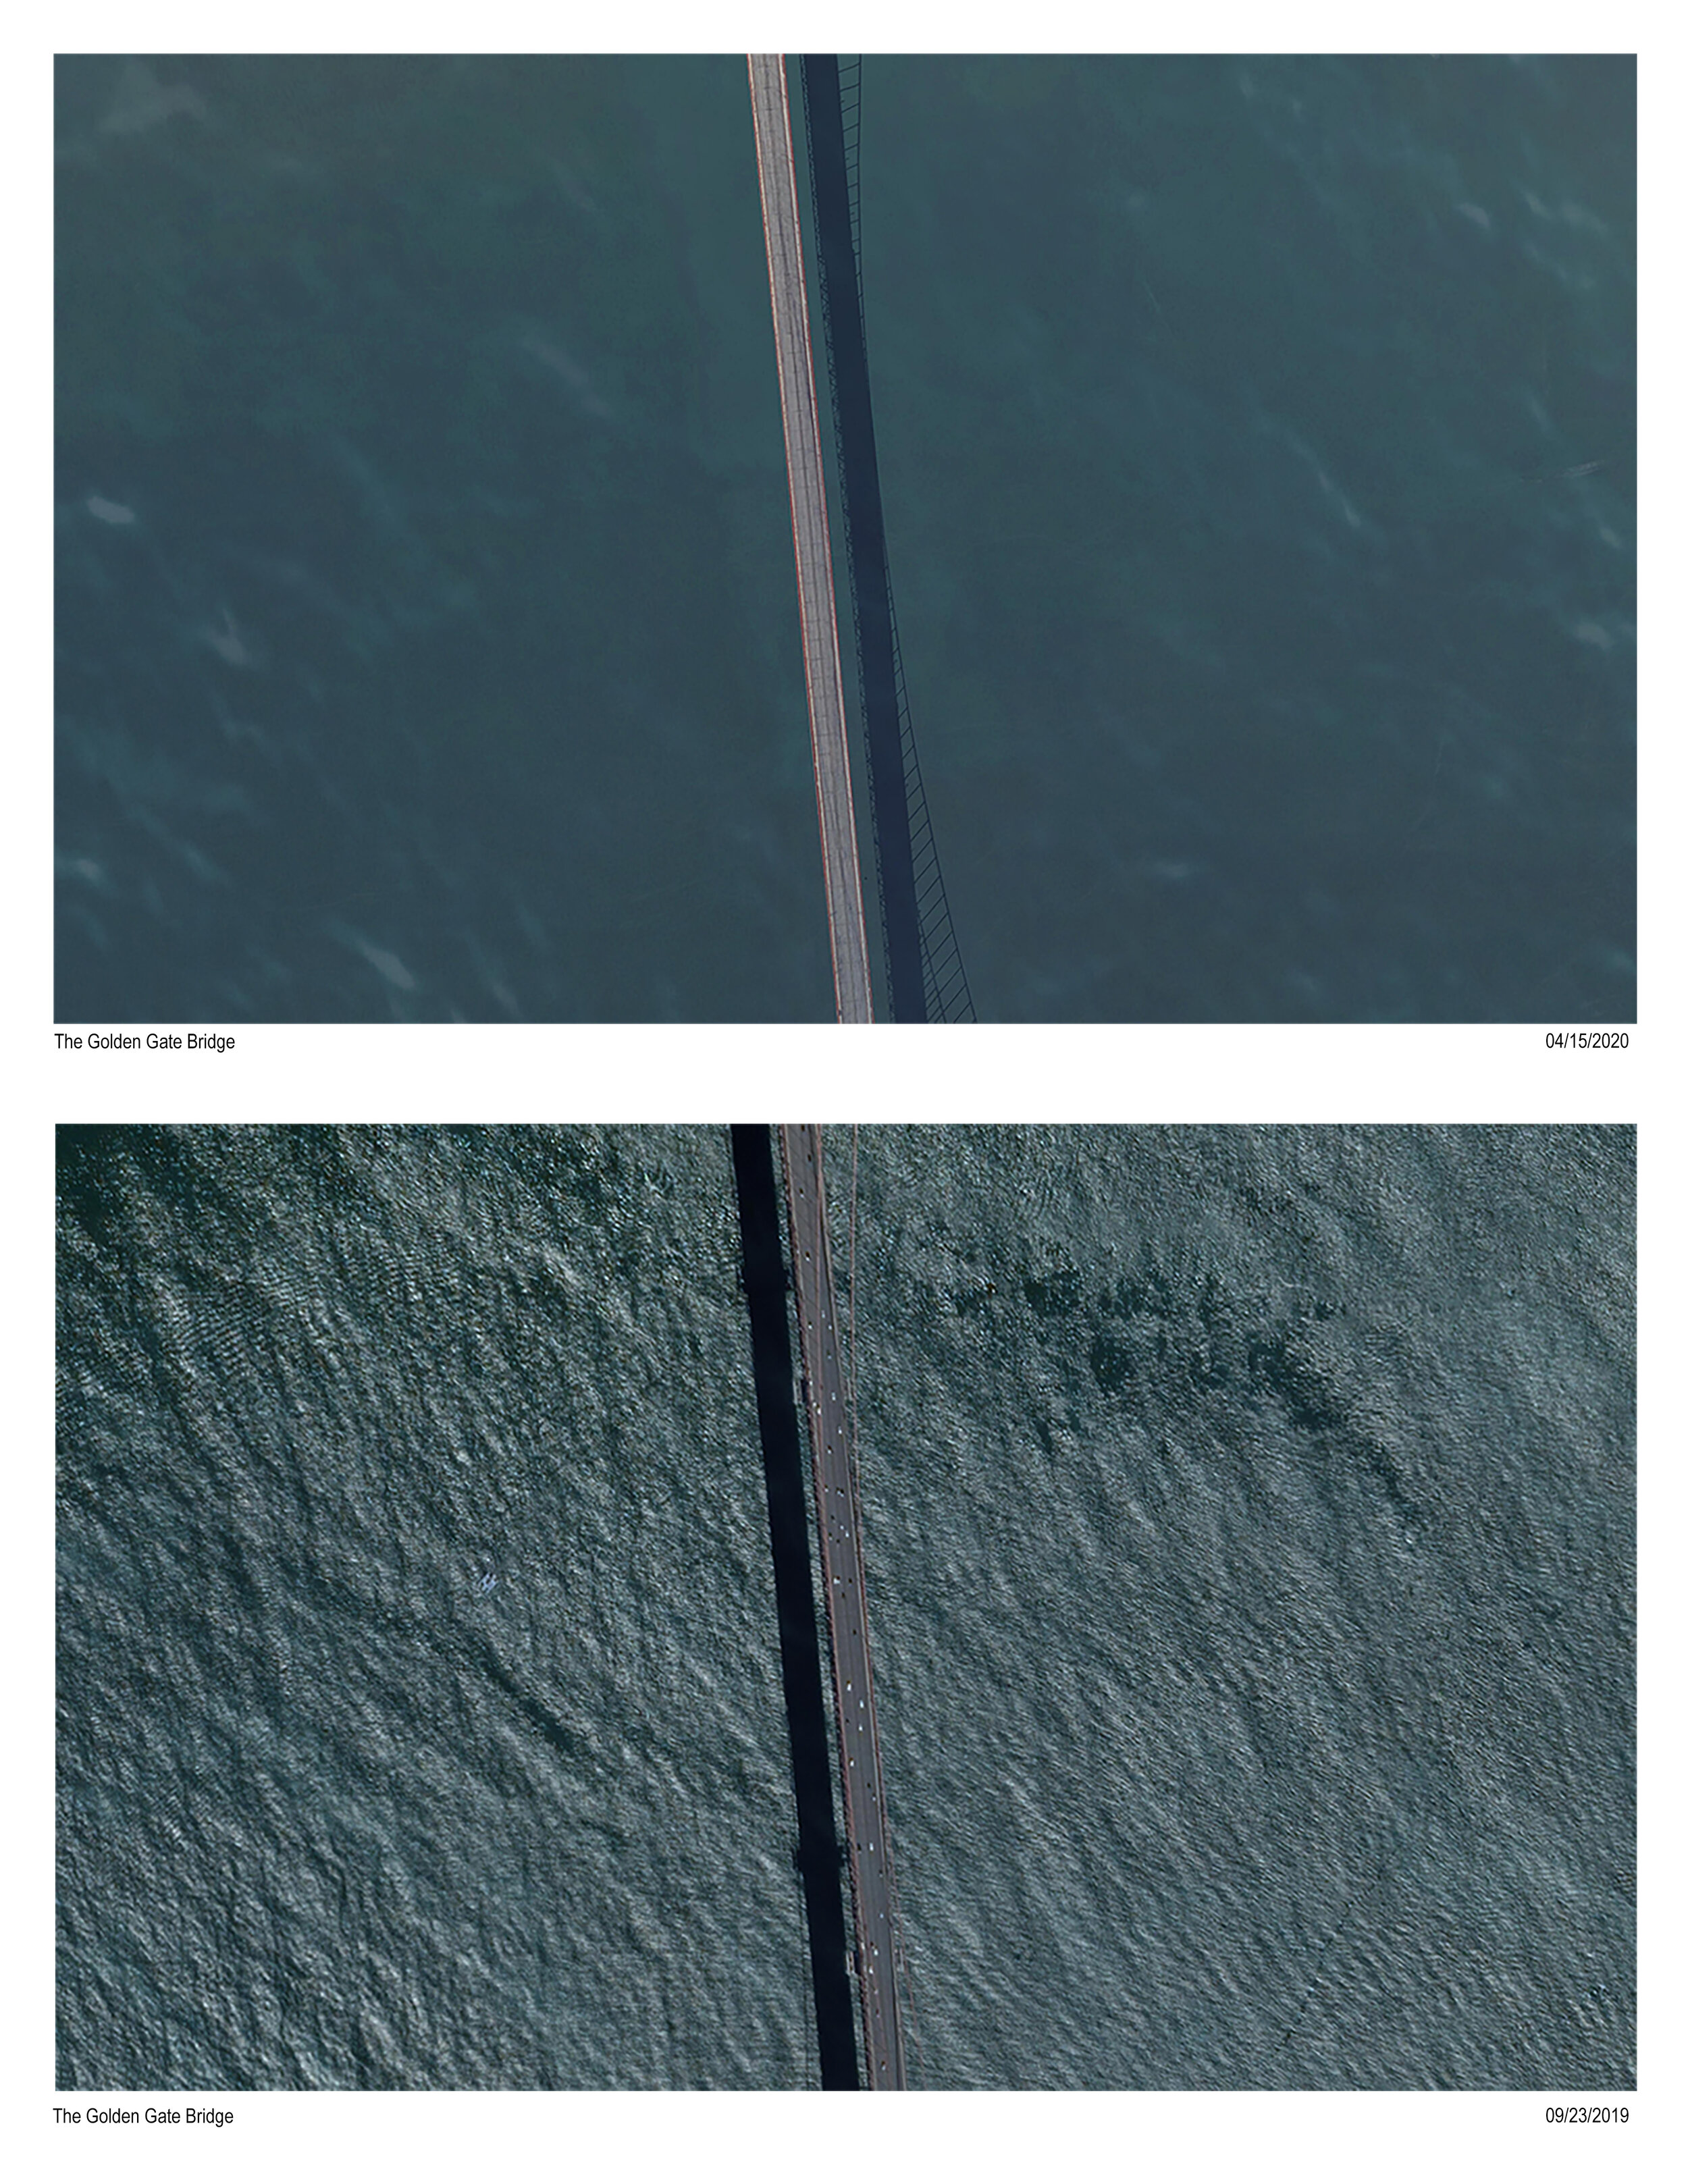  Abdullah Albohalika   The Golden Gate Bridge,  2020  From the series: Not in Use  Google Earth Photo, Digital Inkjet Print  